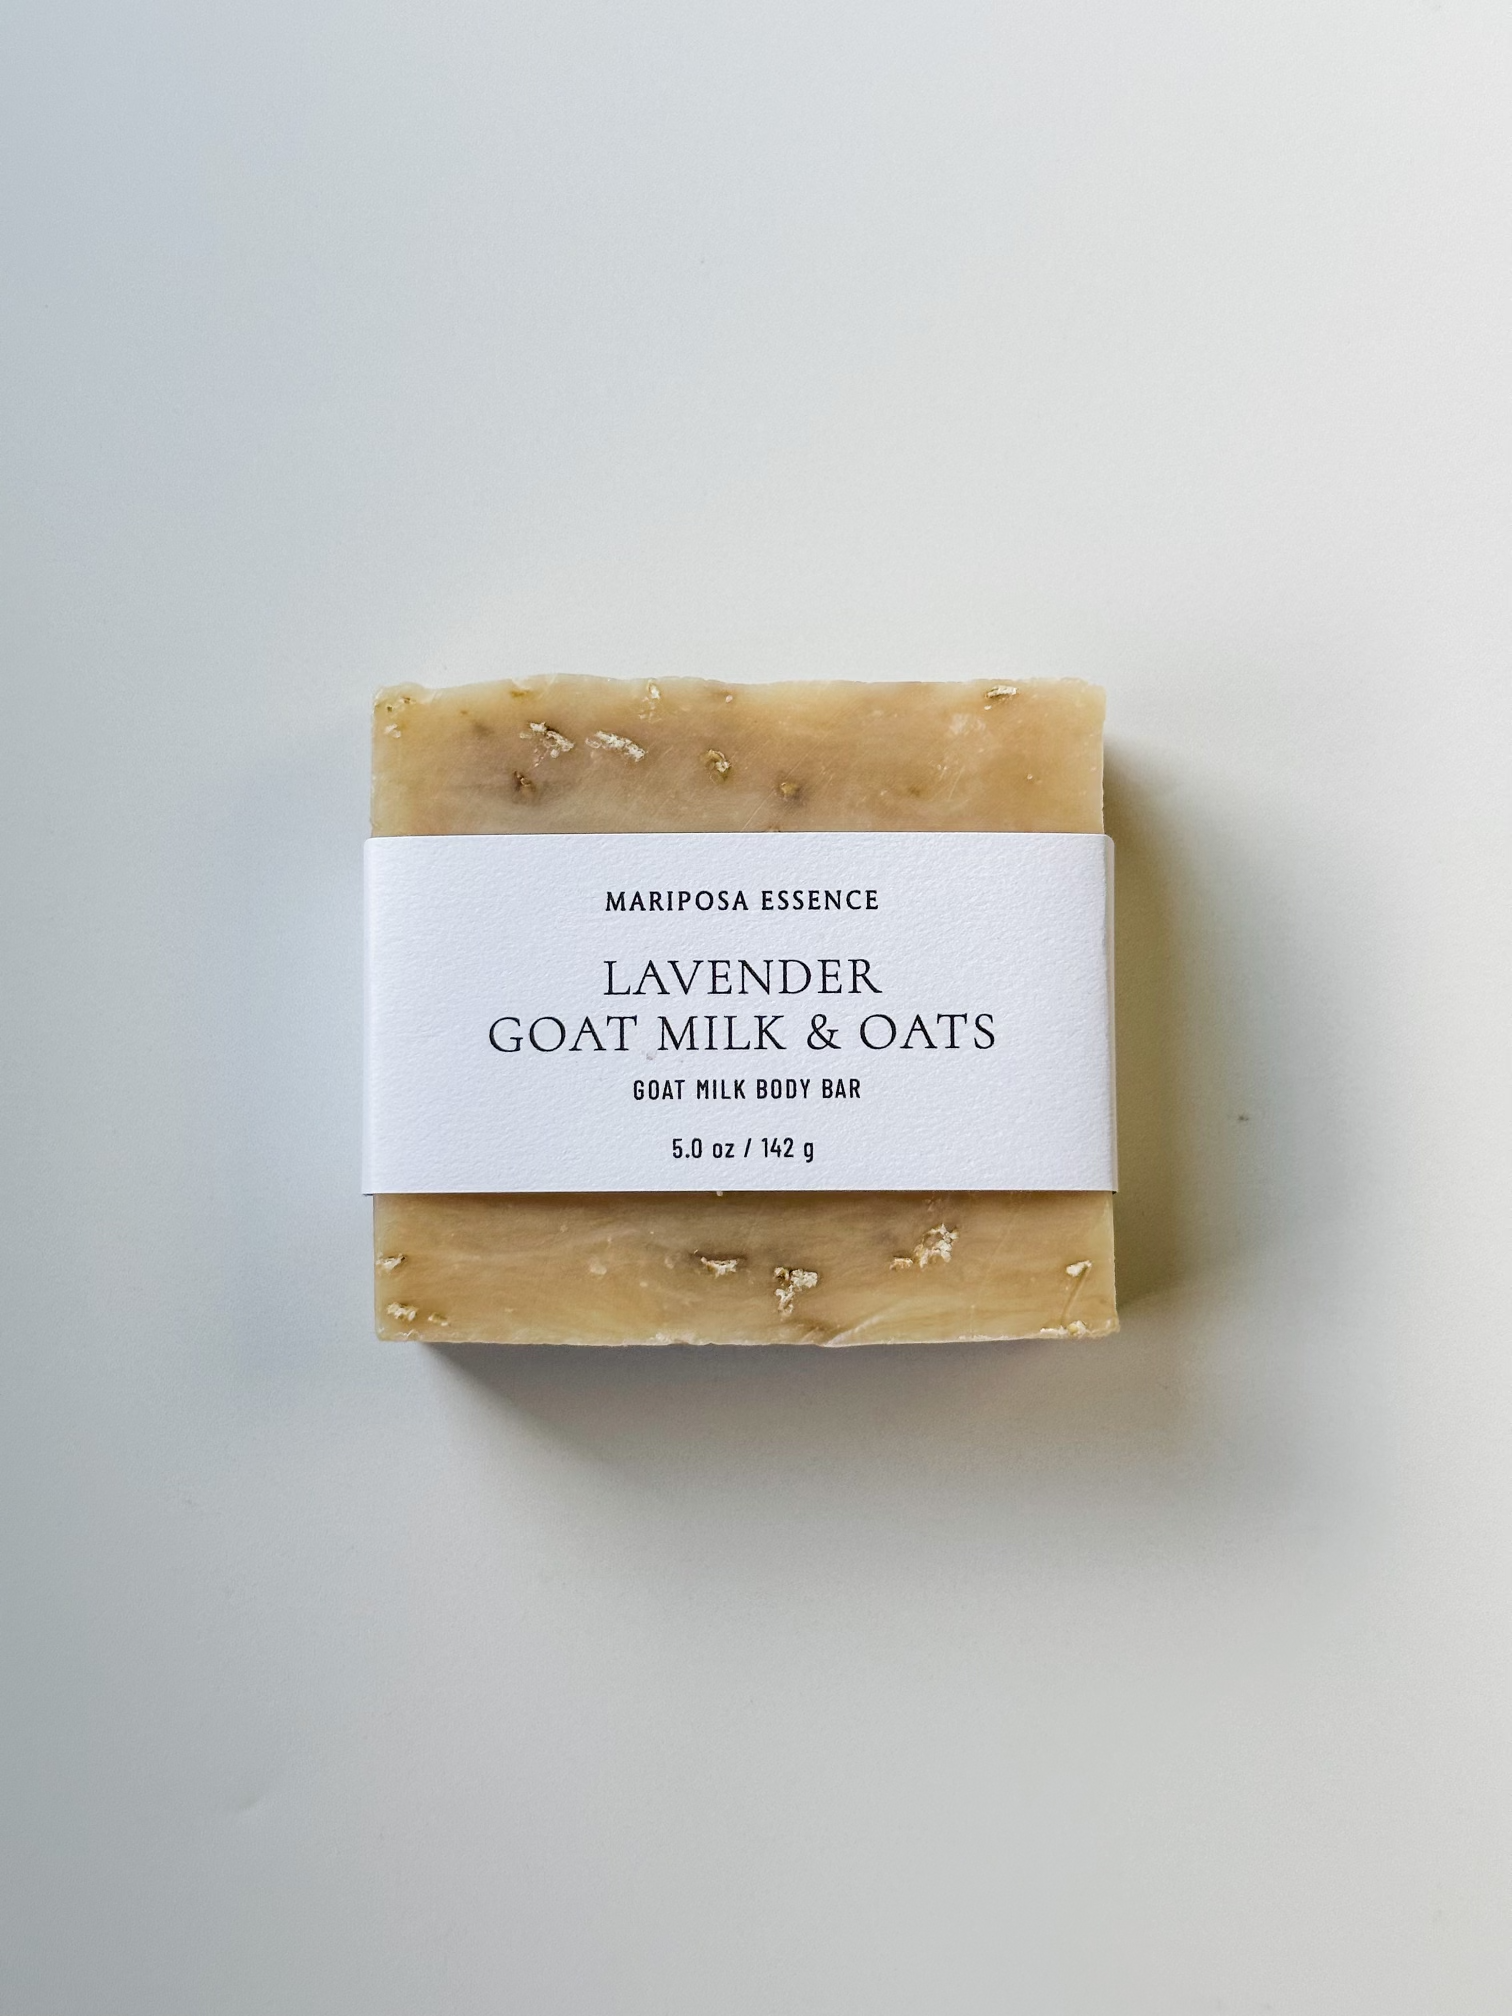 Lavender Goat Milk and Oats body bar